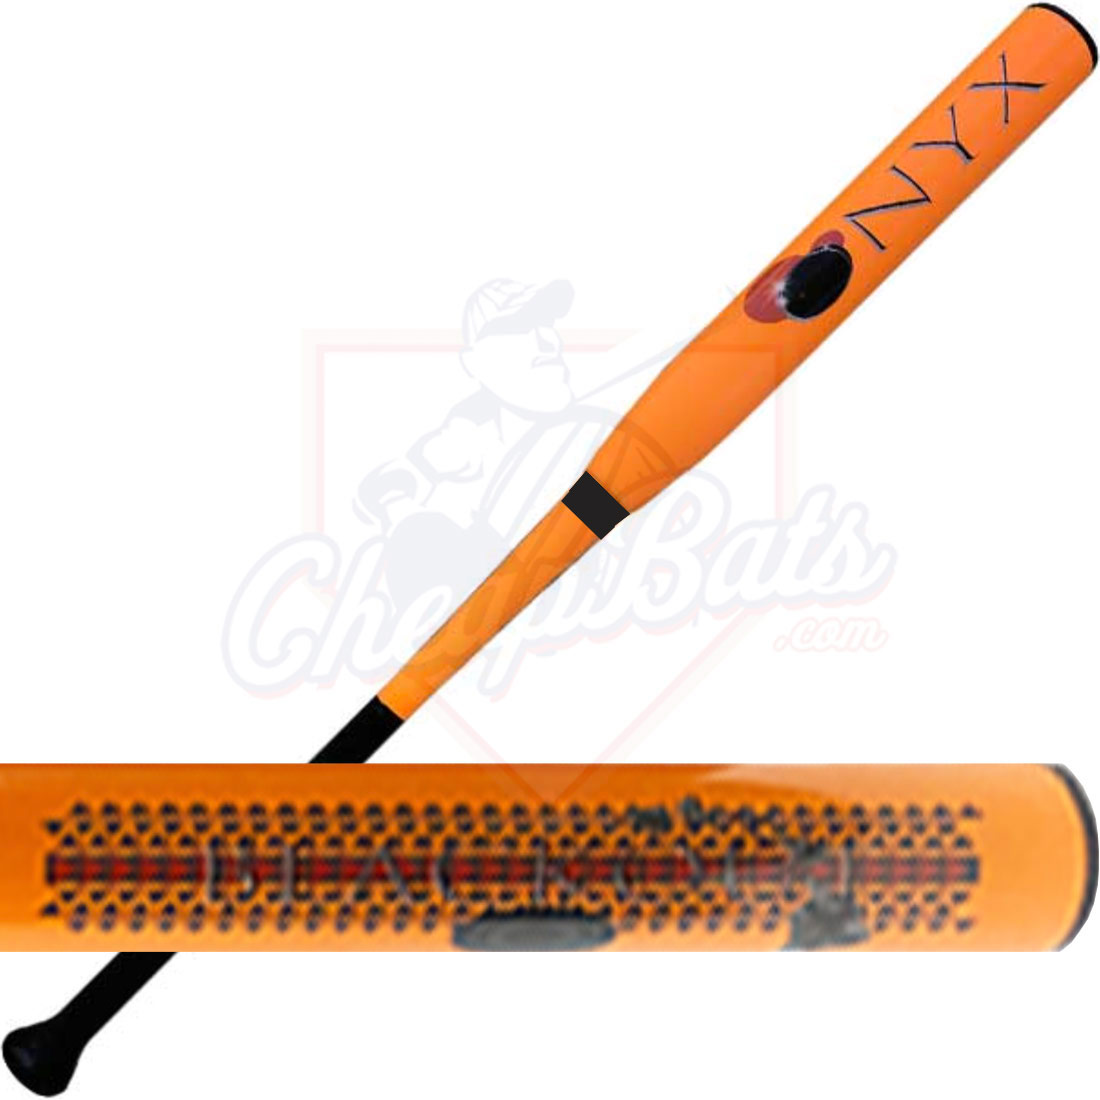 2021 Onyx Blackout Modulus Slowpitch Softball Bat Mid Loaded USSSA